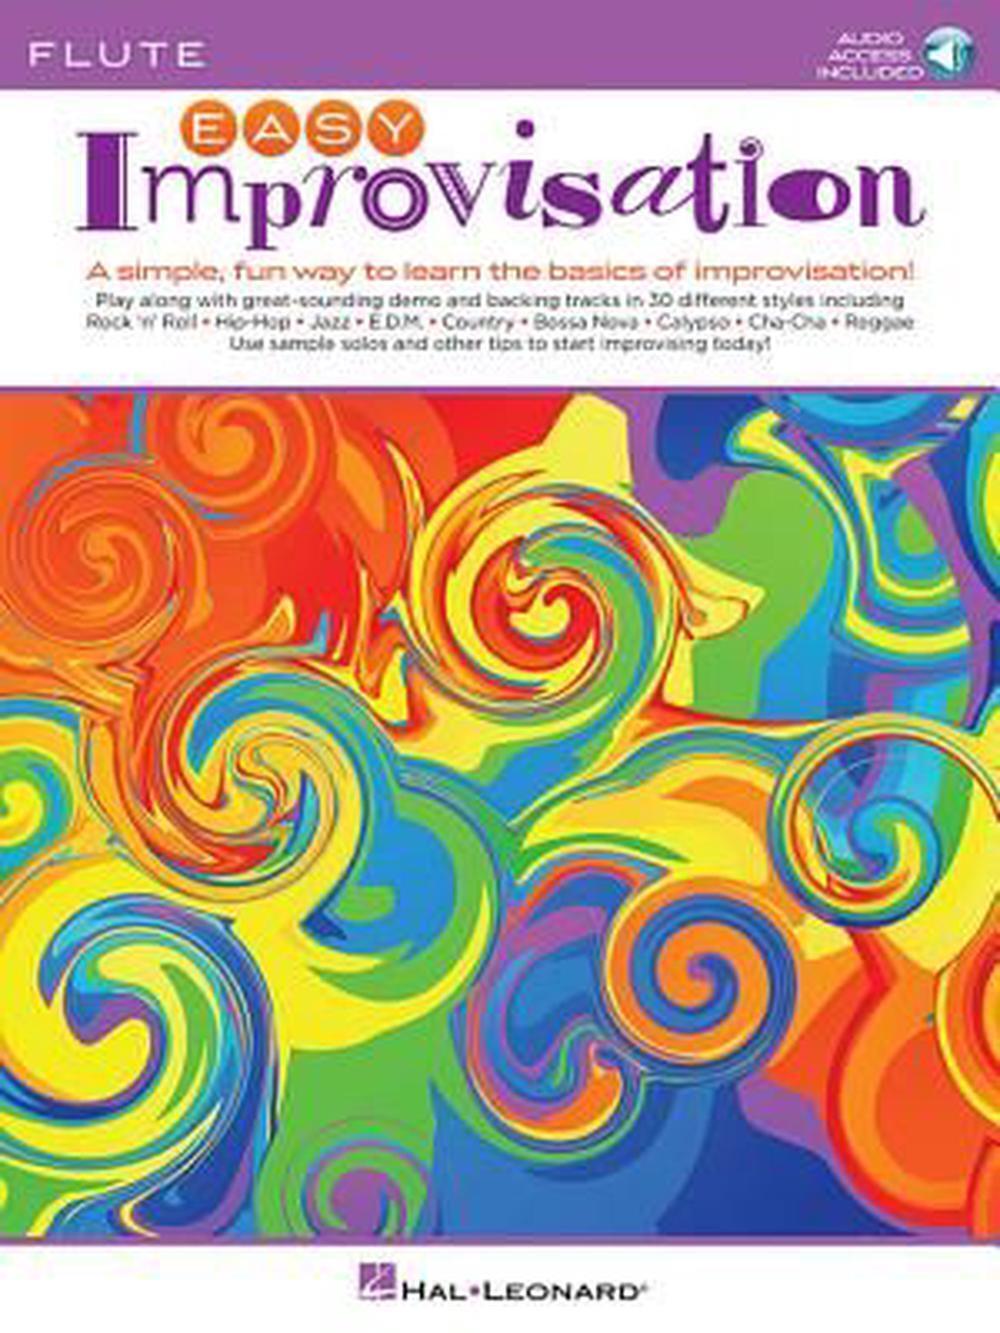 Easy Improvisation, A simple, fun way to learn the basics of improvisation! | Suono Flauti